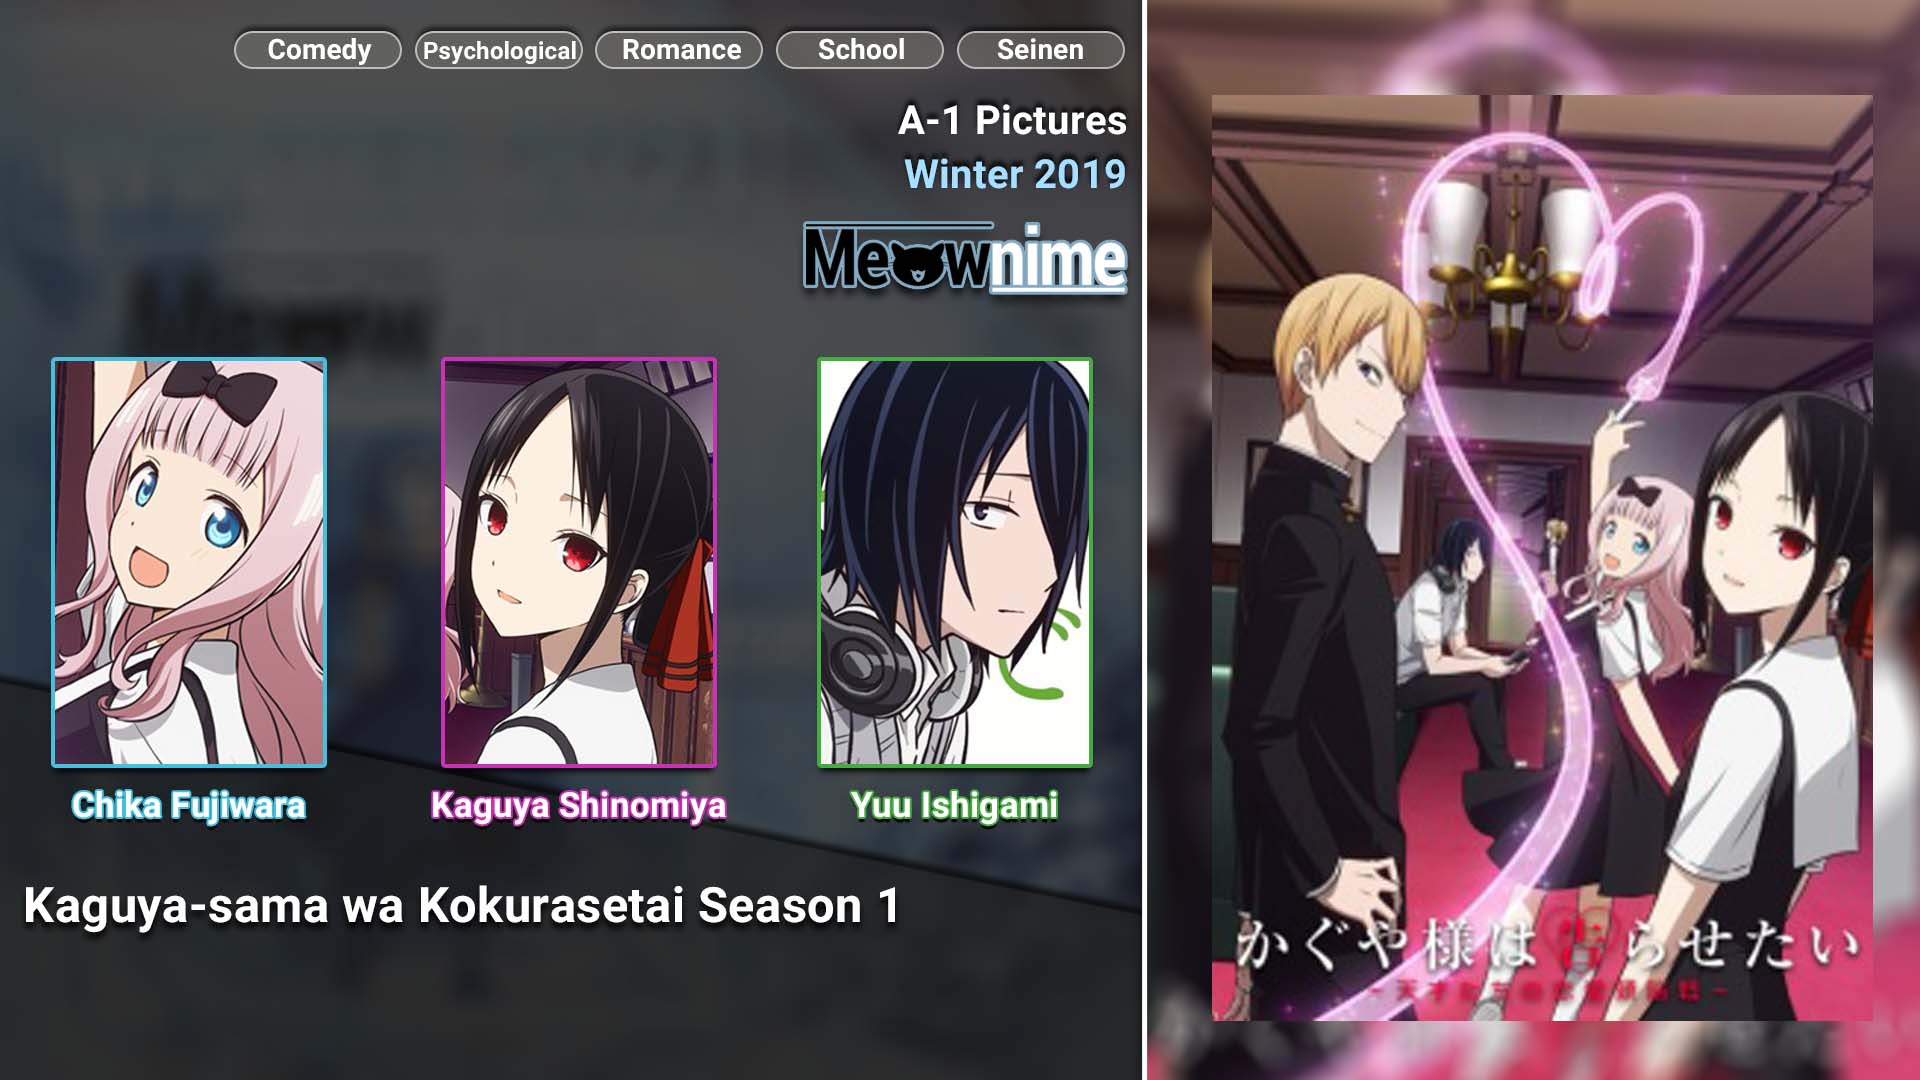 Kaguya-sama wa Kokurasetai Season 1